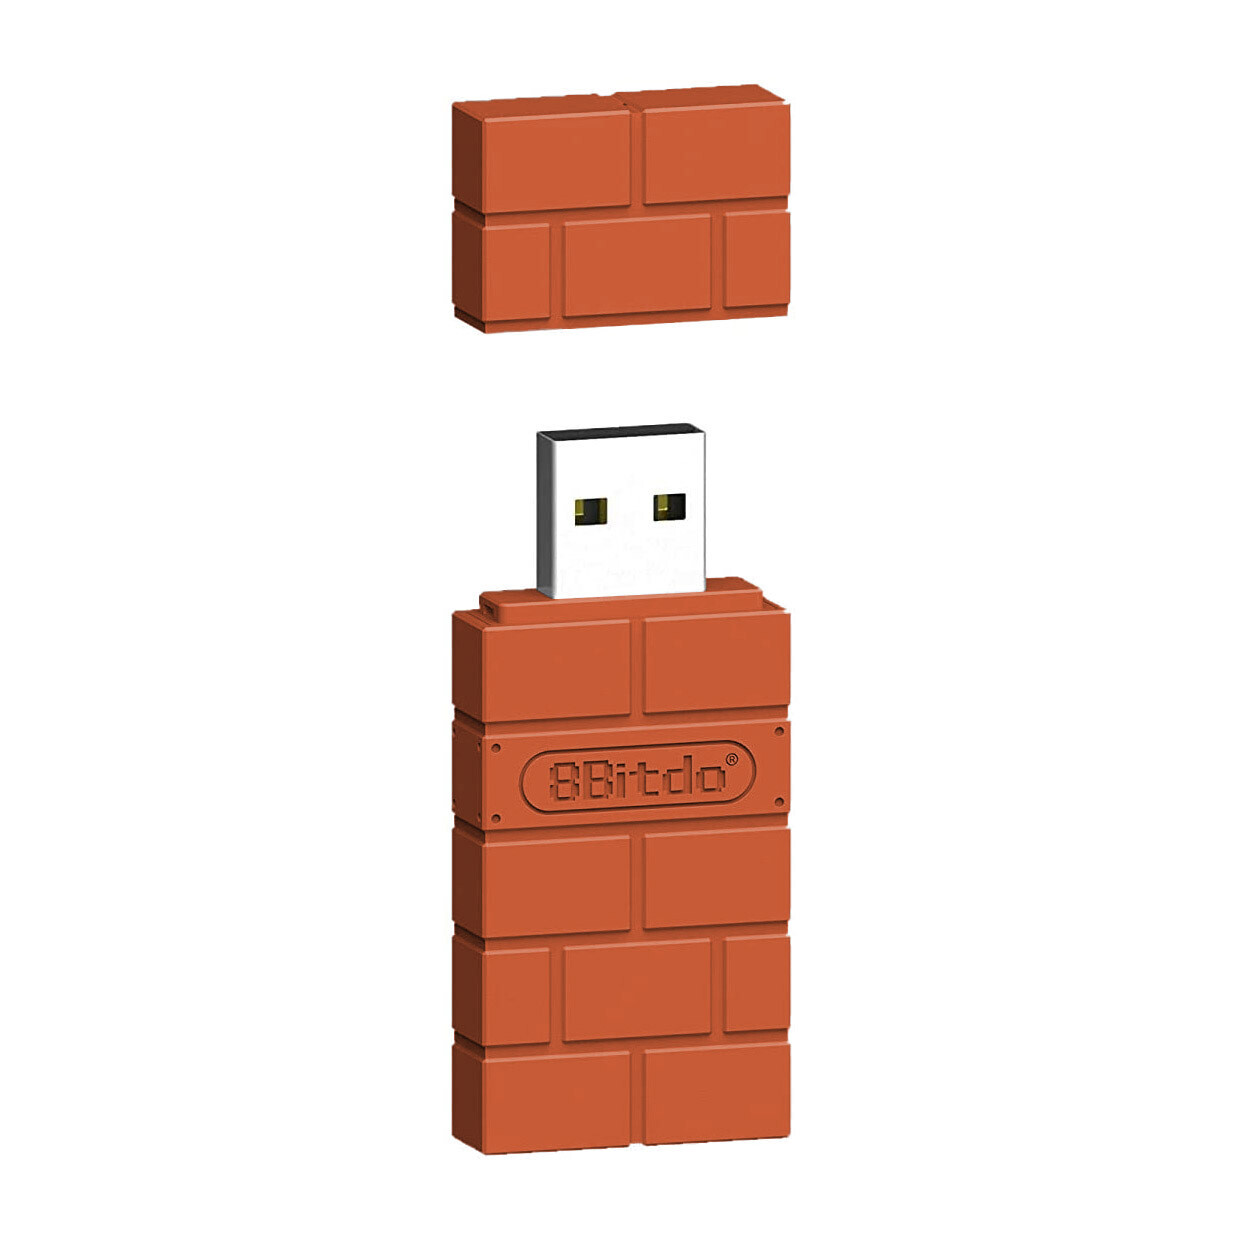 8bitdo Receiver (USB Orange)